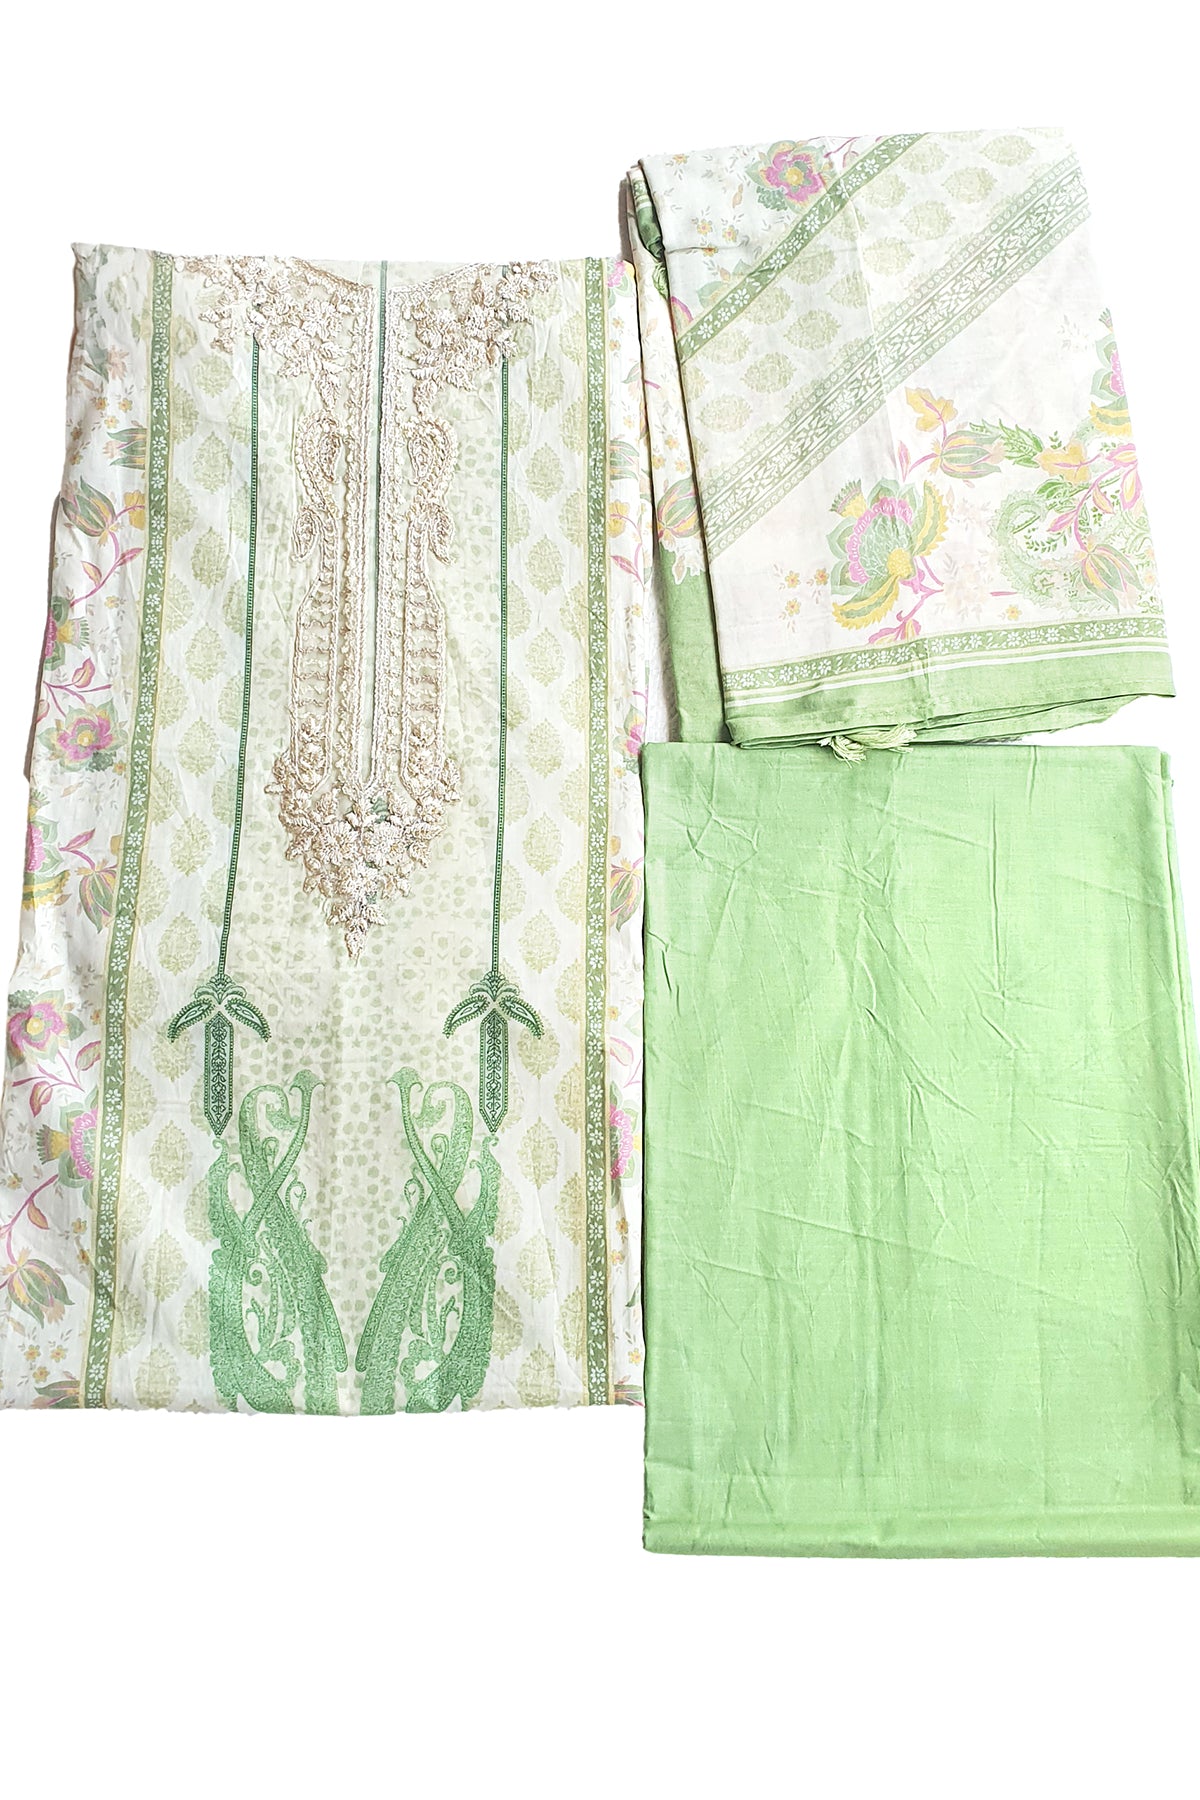 Pista Cotton Neck Zari & Thread Embroidered Printed Suit